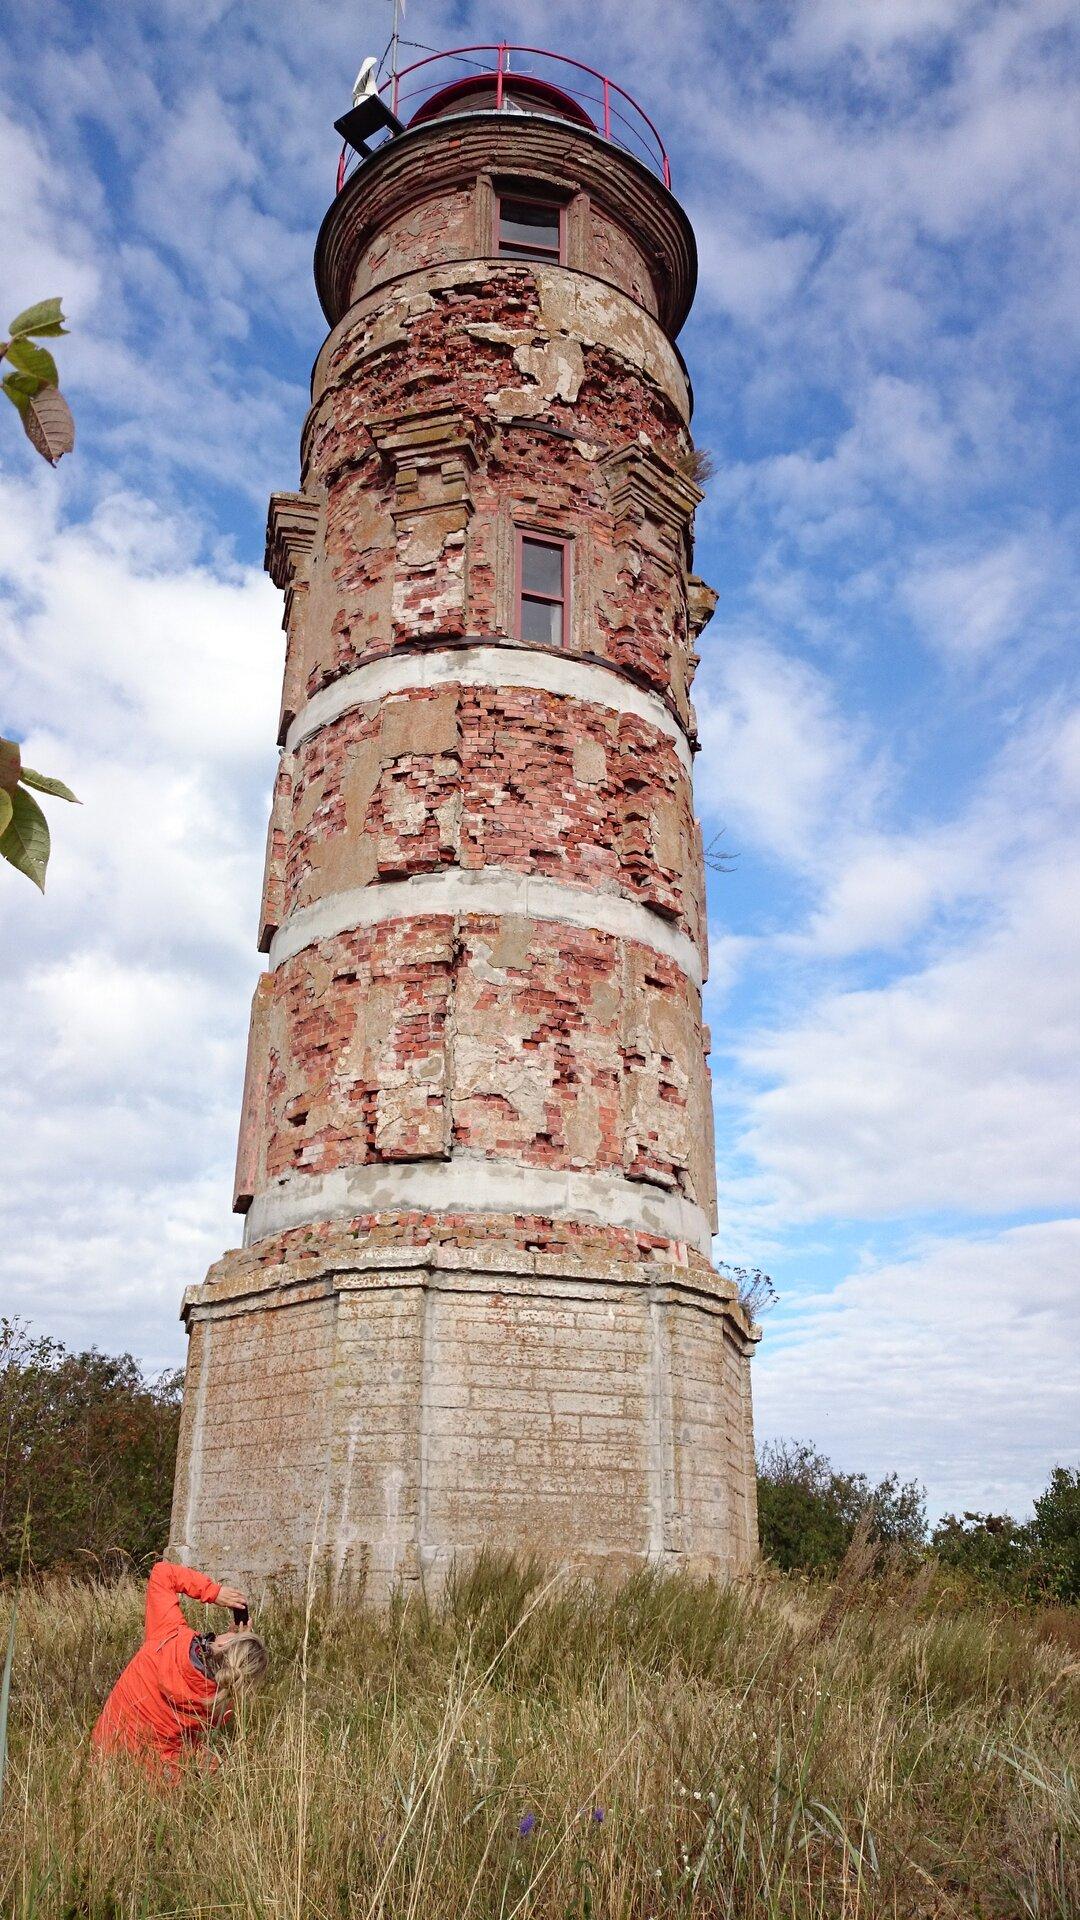 Sorgu lighthouse